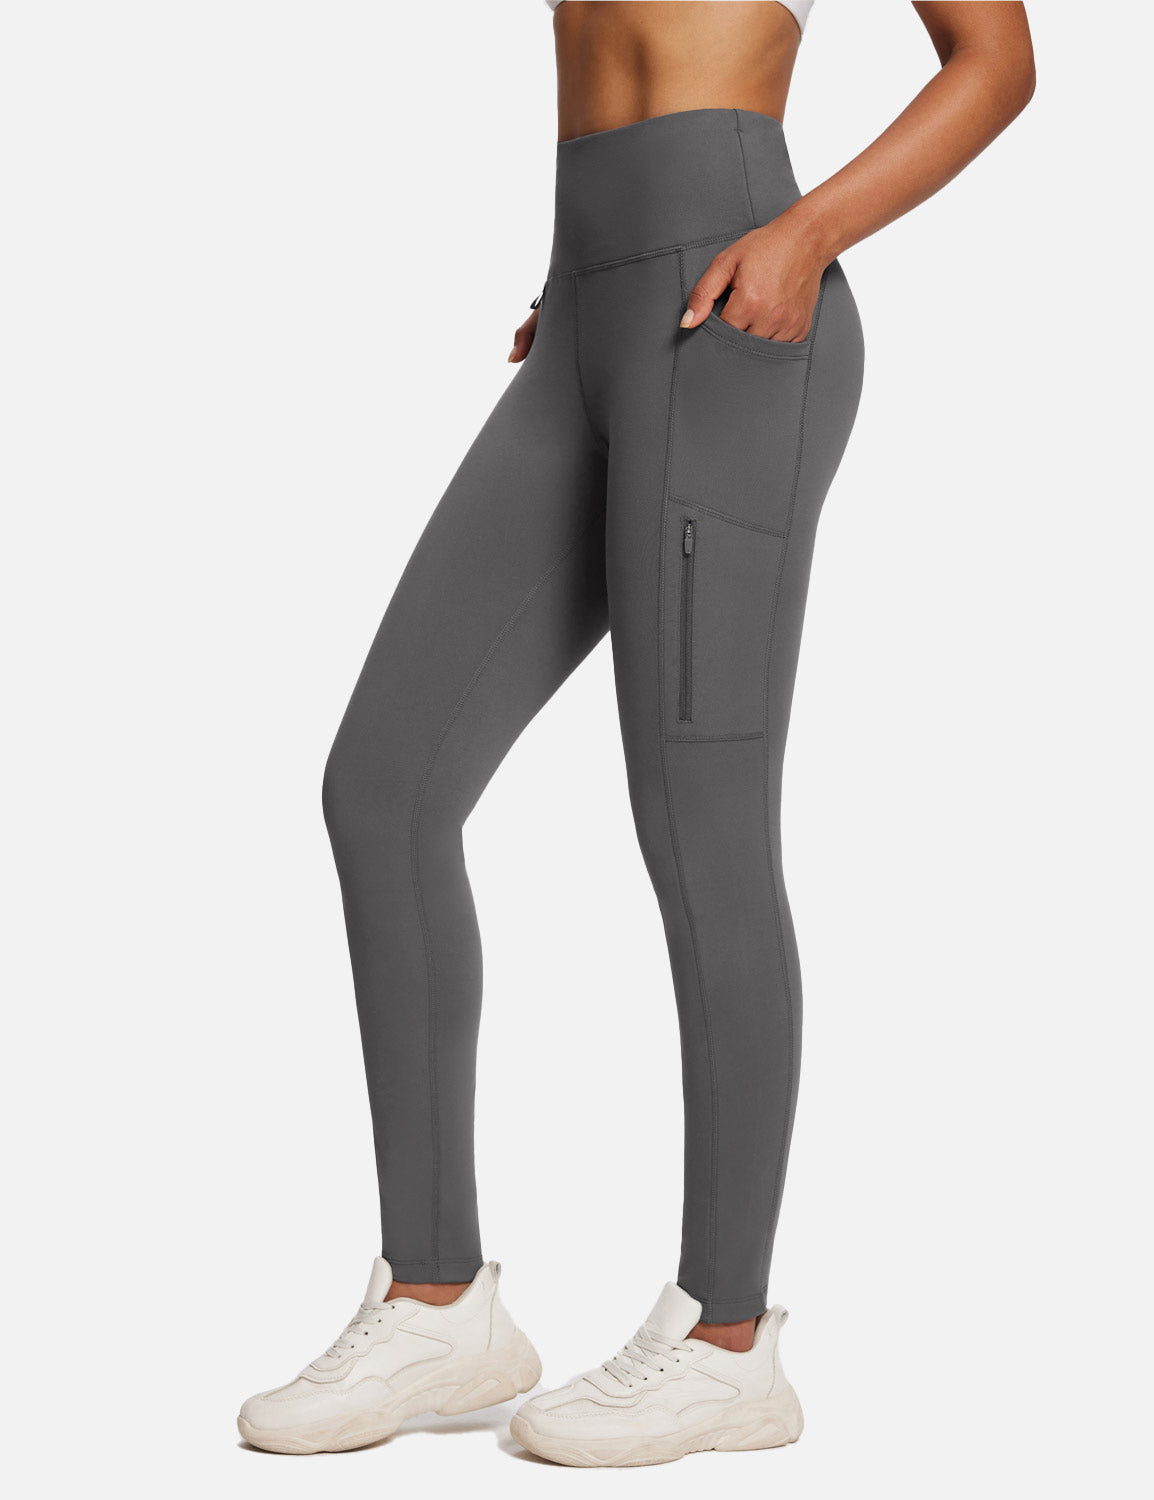 Baleaf Women's High-Rise Zipper Pockets Thermal Pants – Baleaf Sports